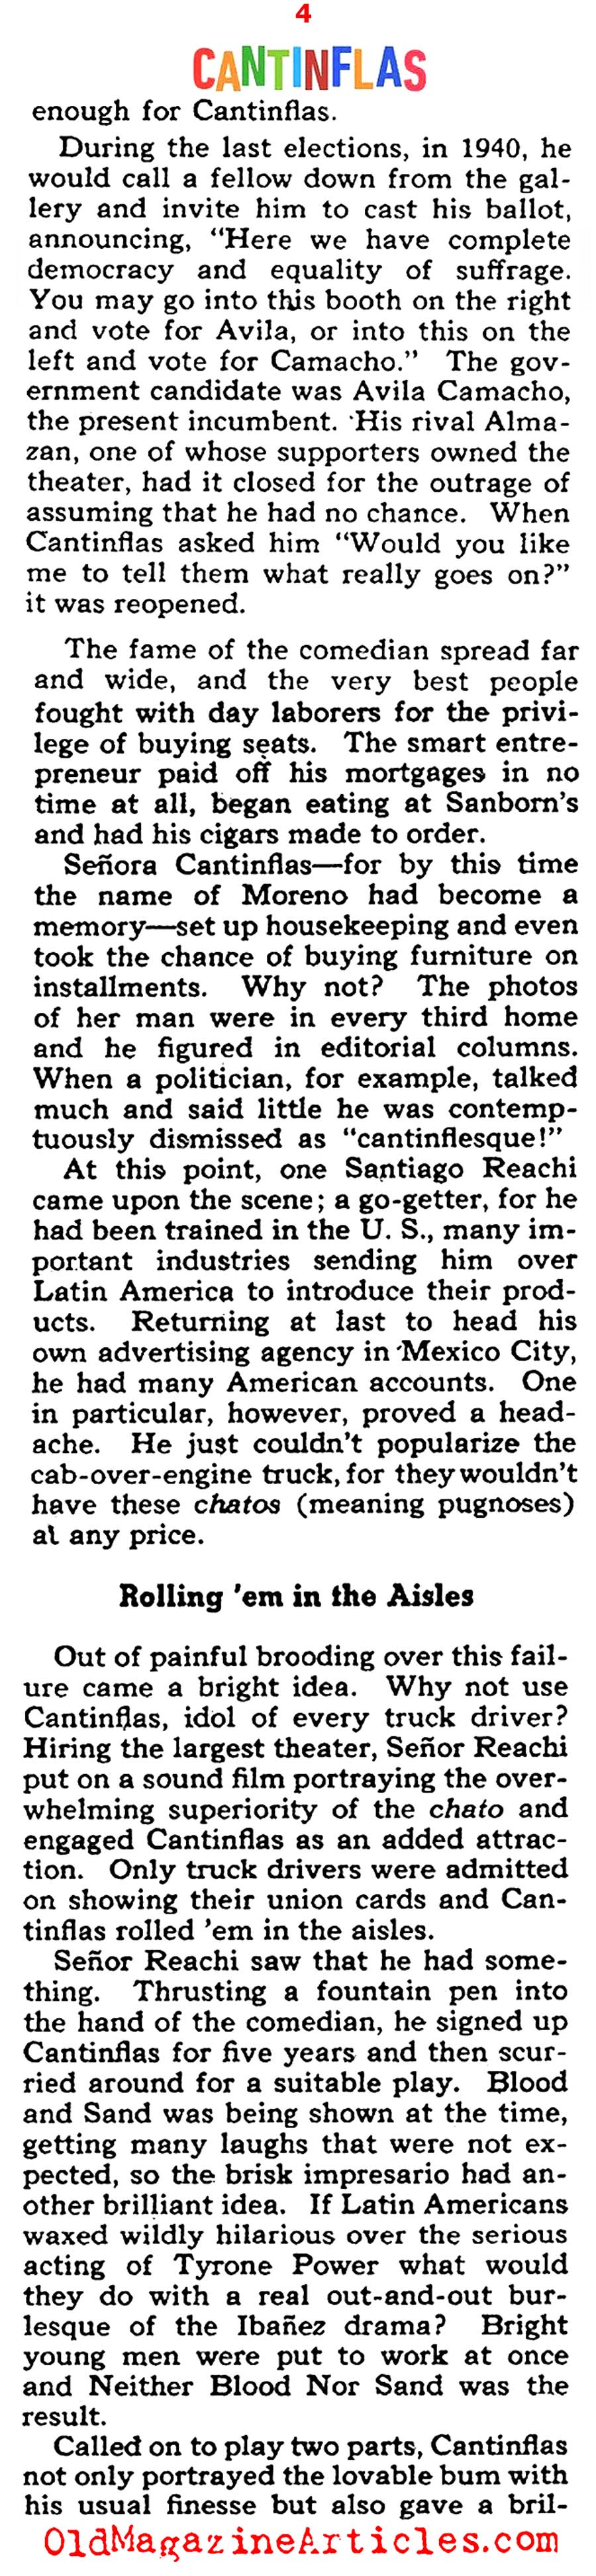 Mario Moreno: The Mexican Charlie Chaplin (Collier's Magazine, 1942)